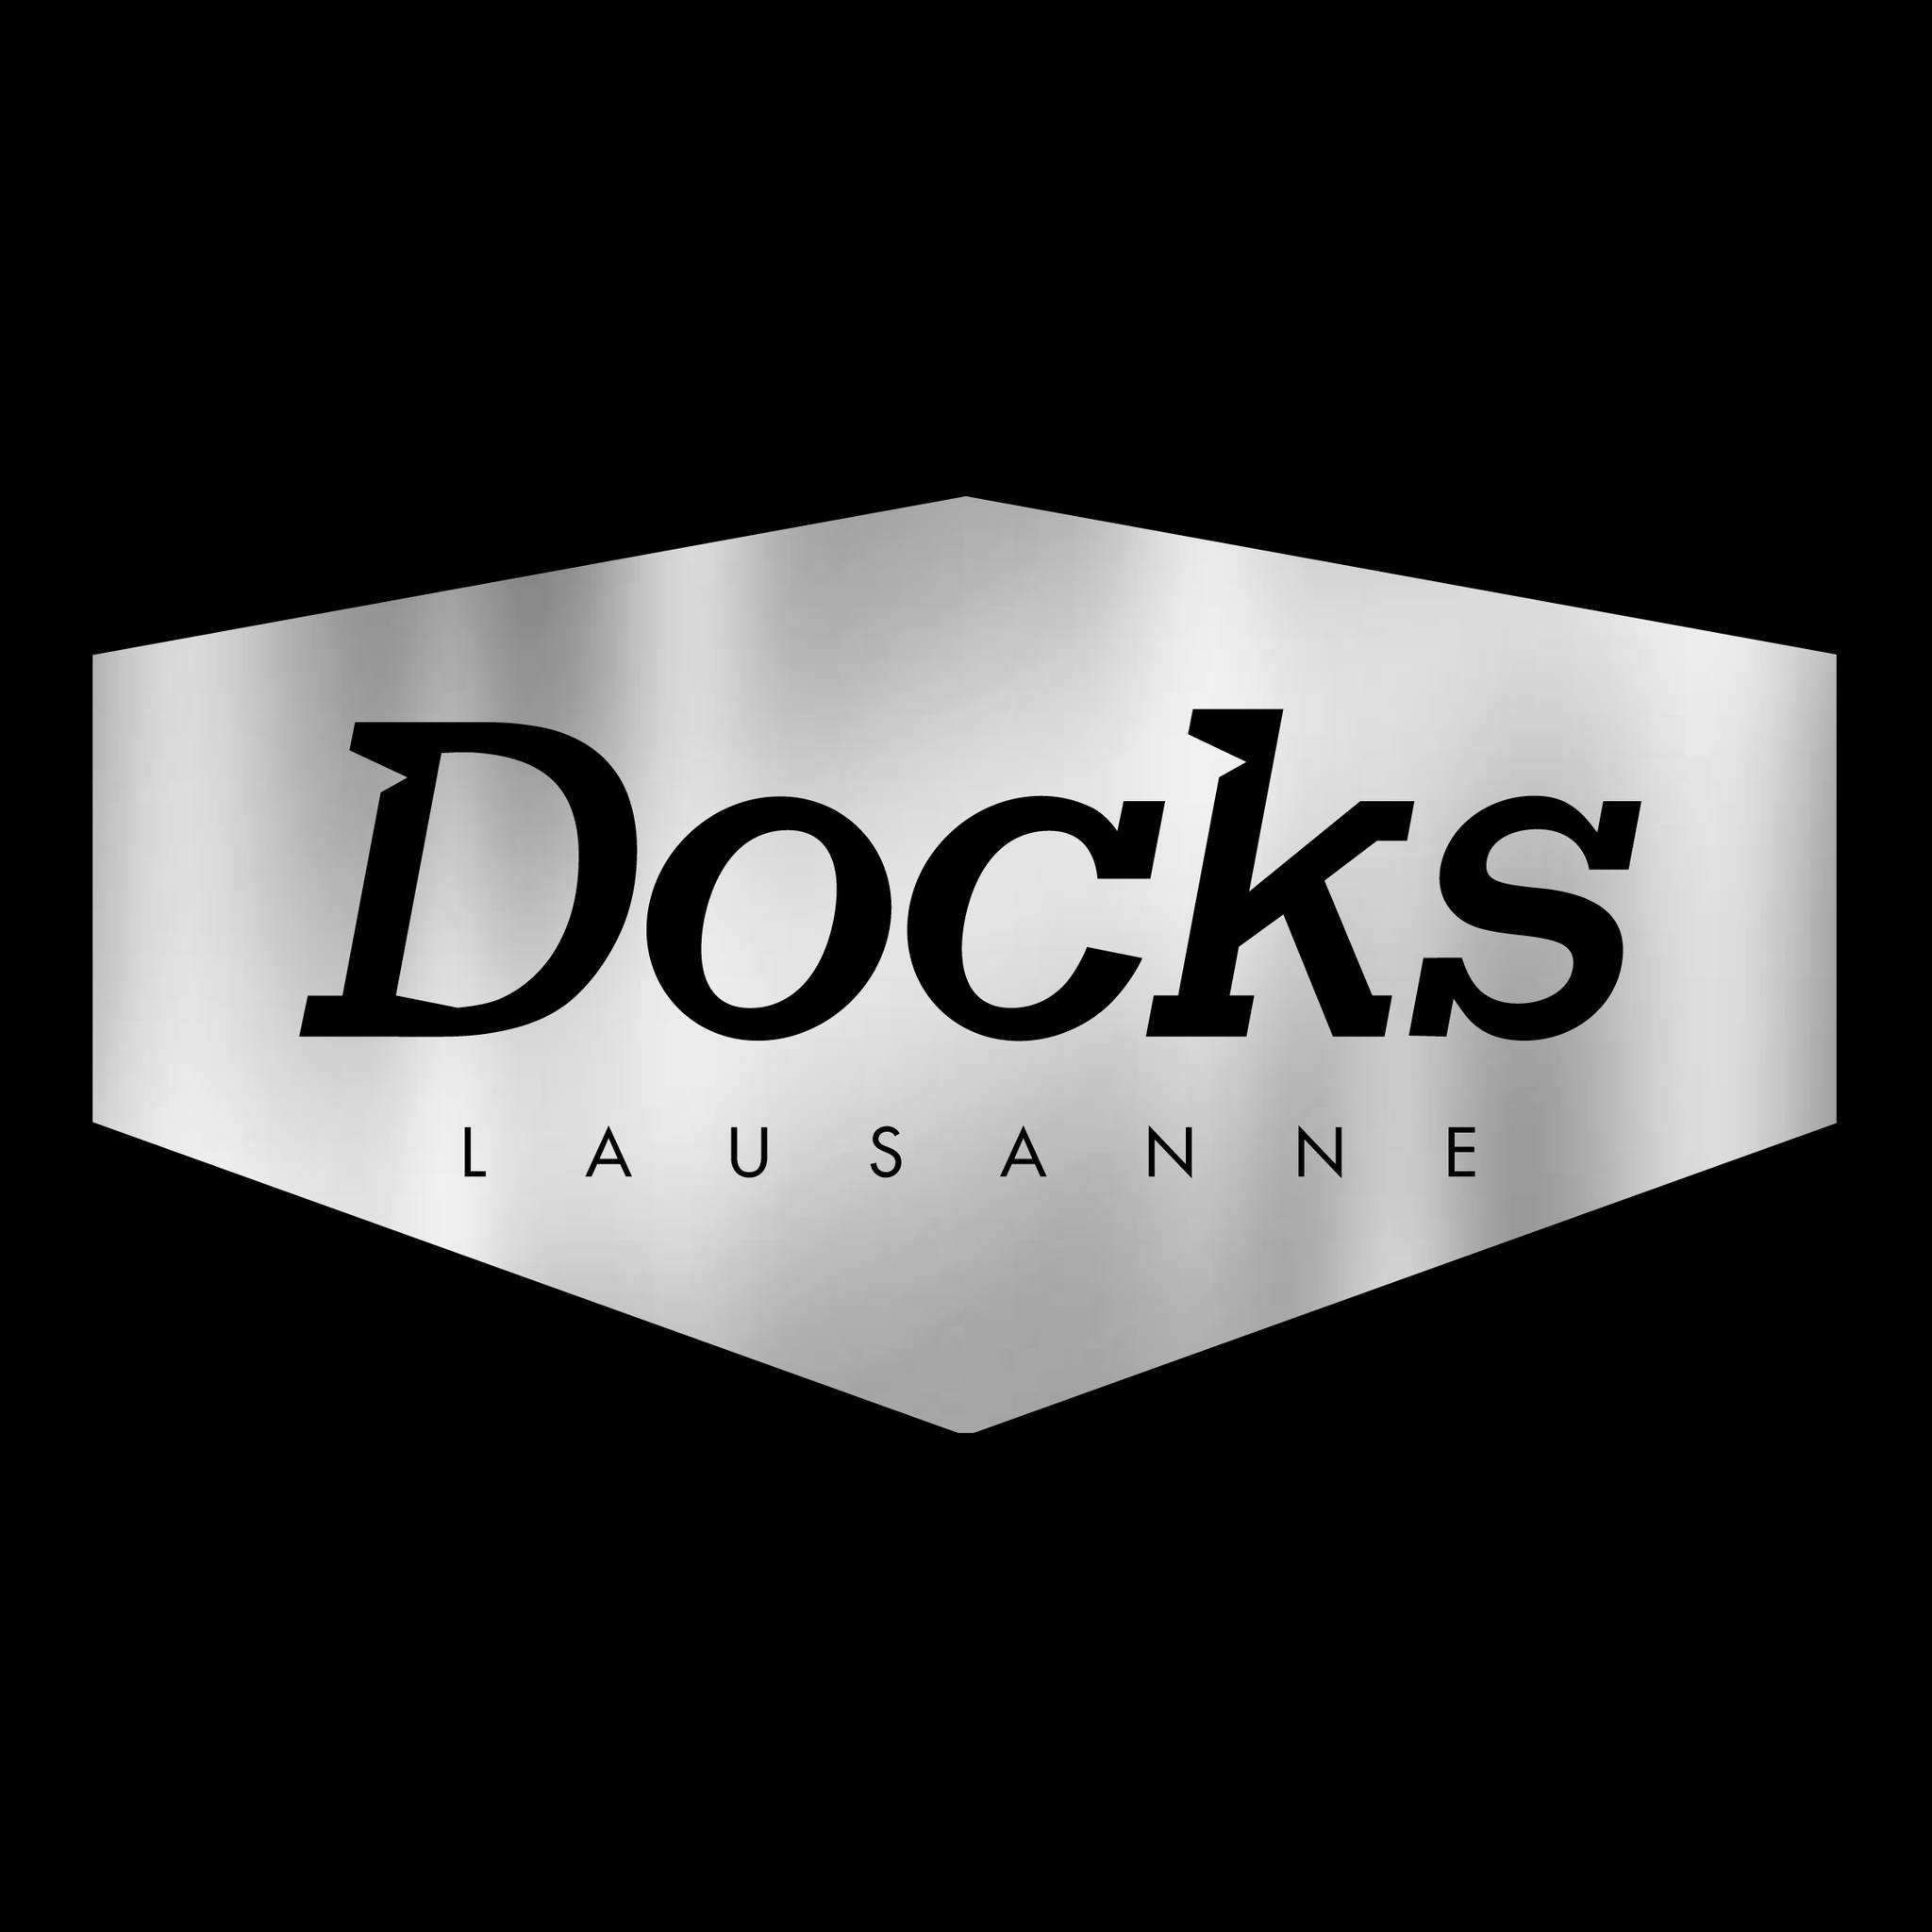 Rendez Vous - Ultra Sunn in der Les Docks Lausanne Tickets